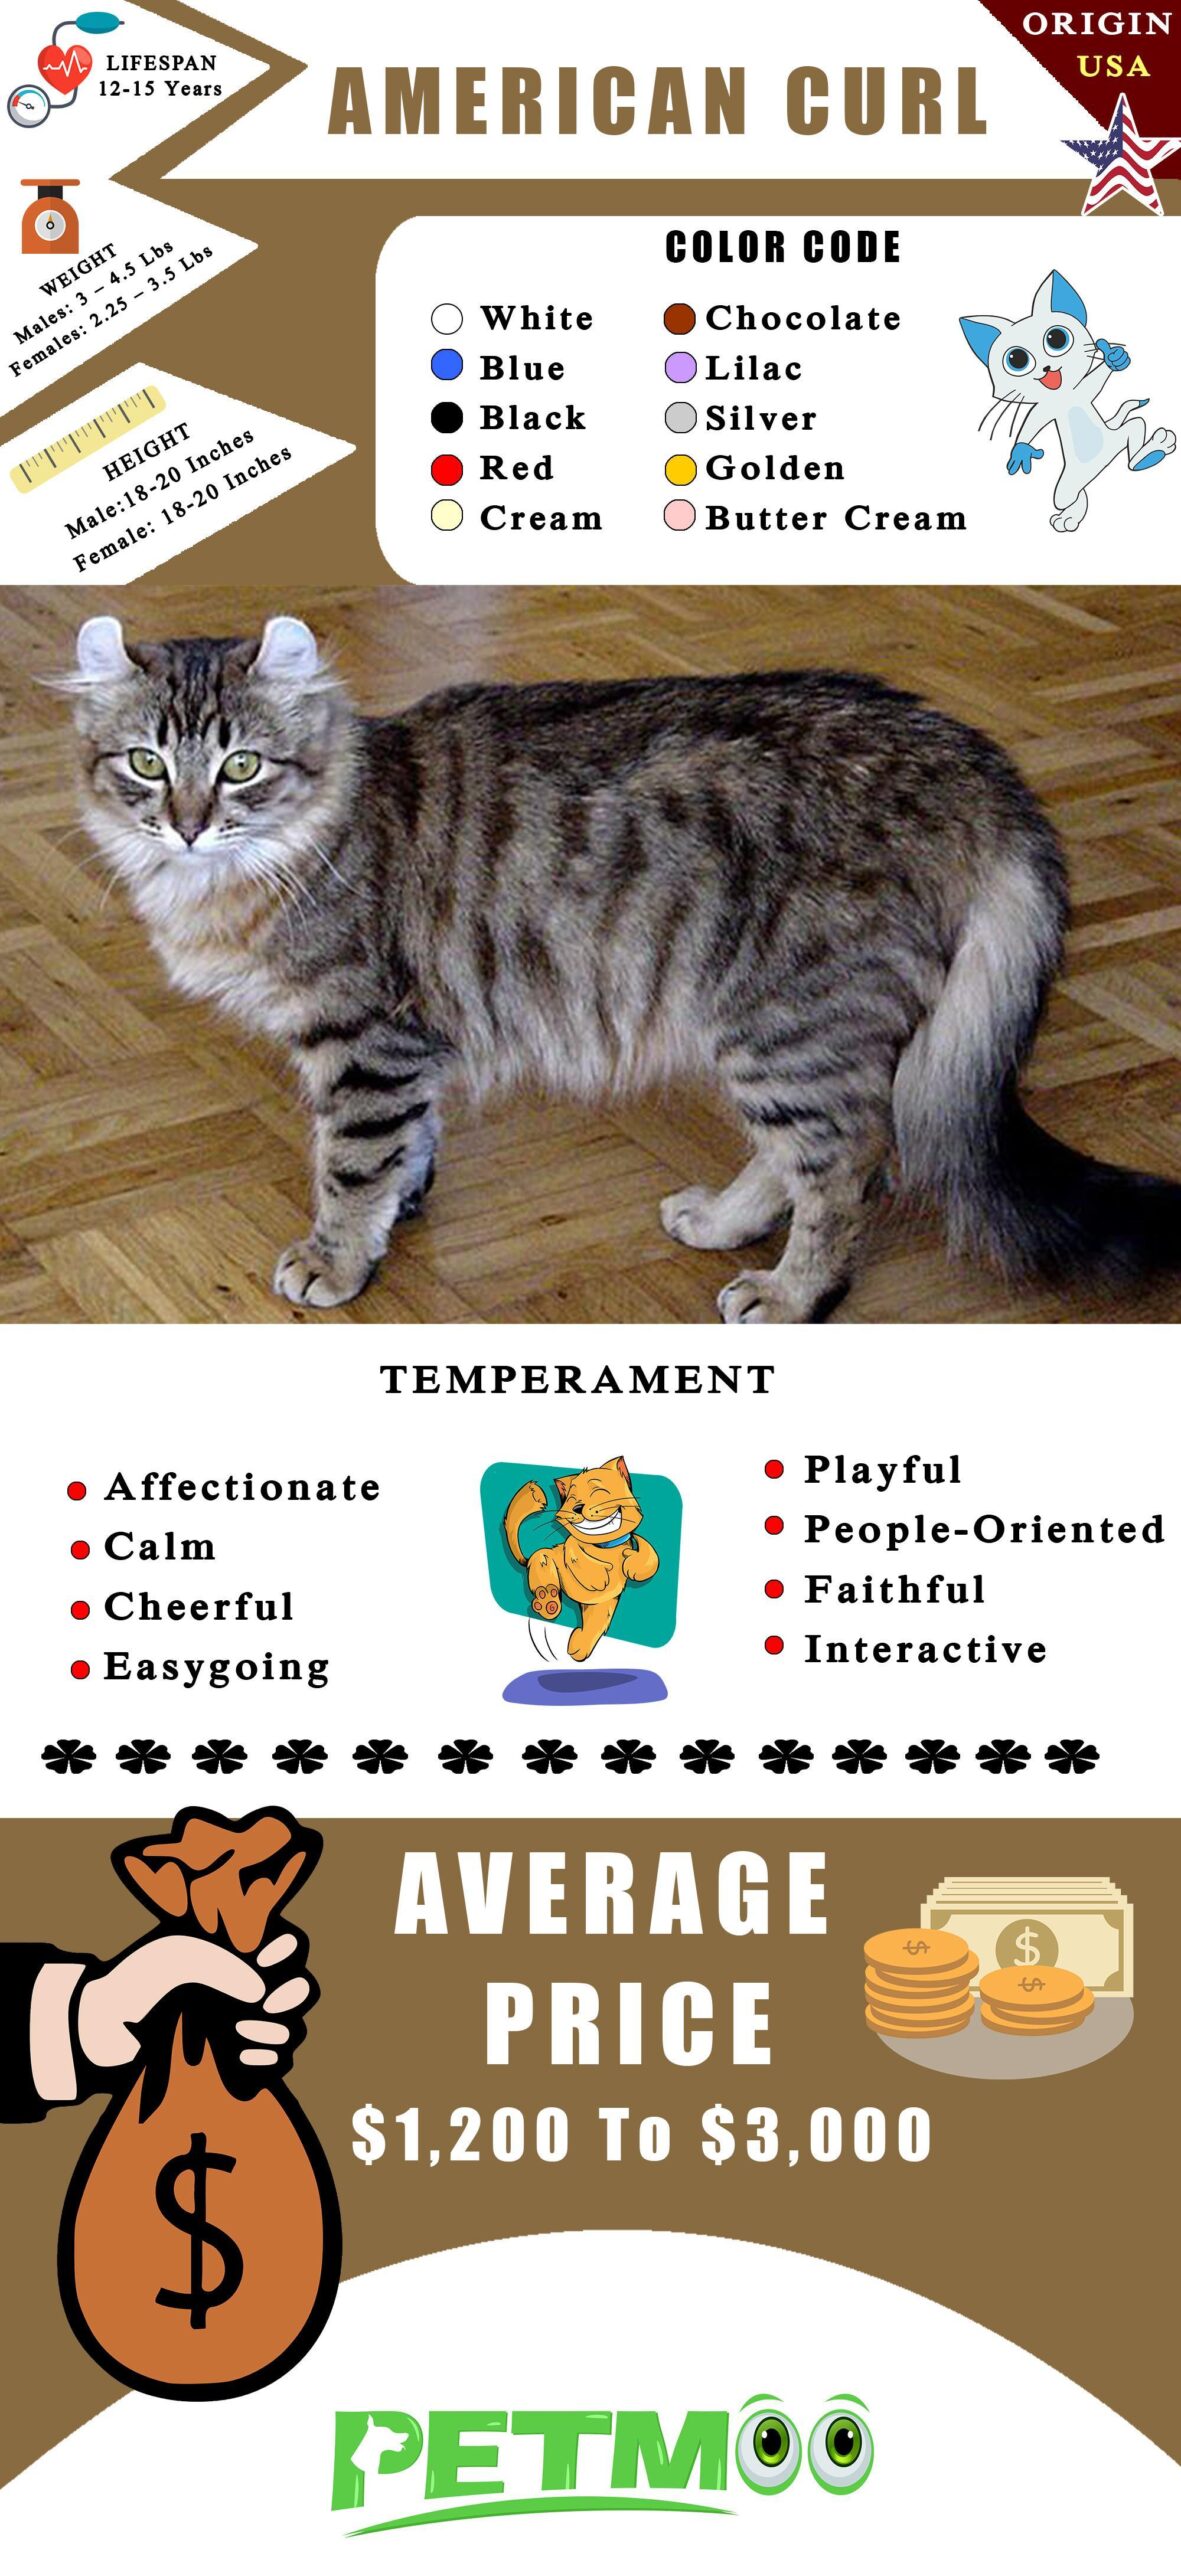 American Curl Cat Infographic